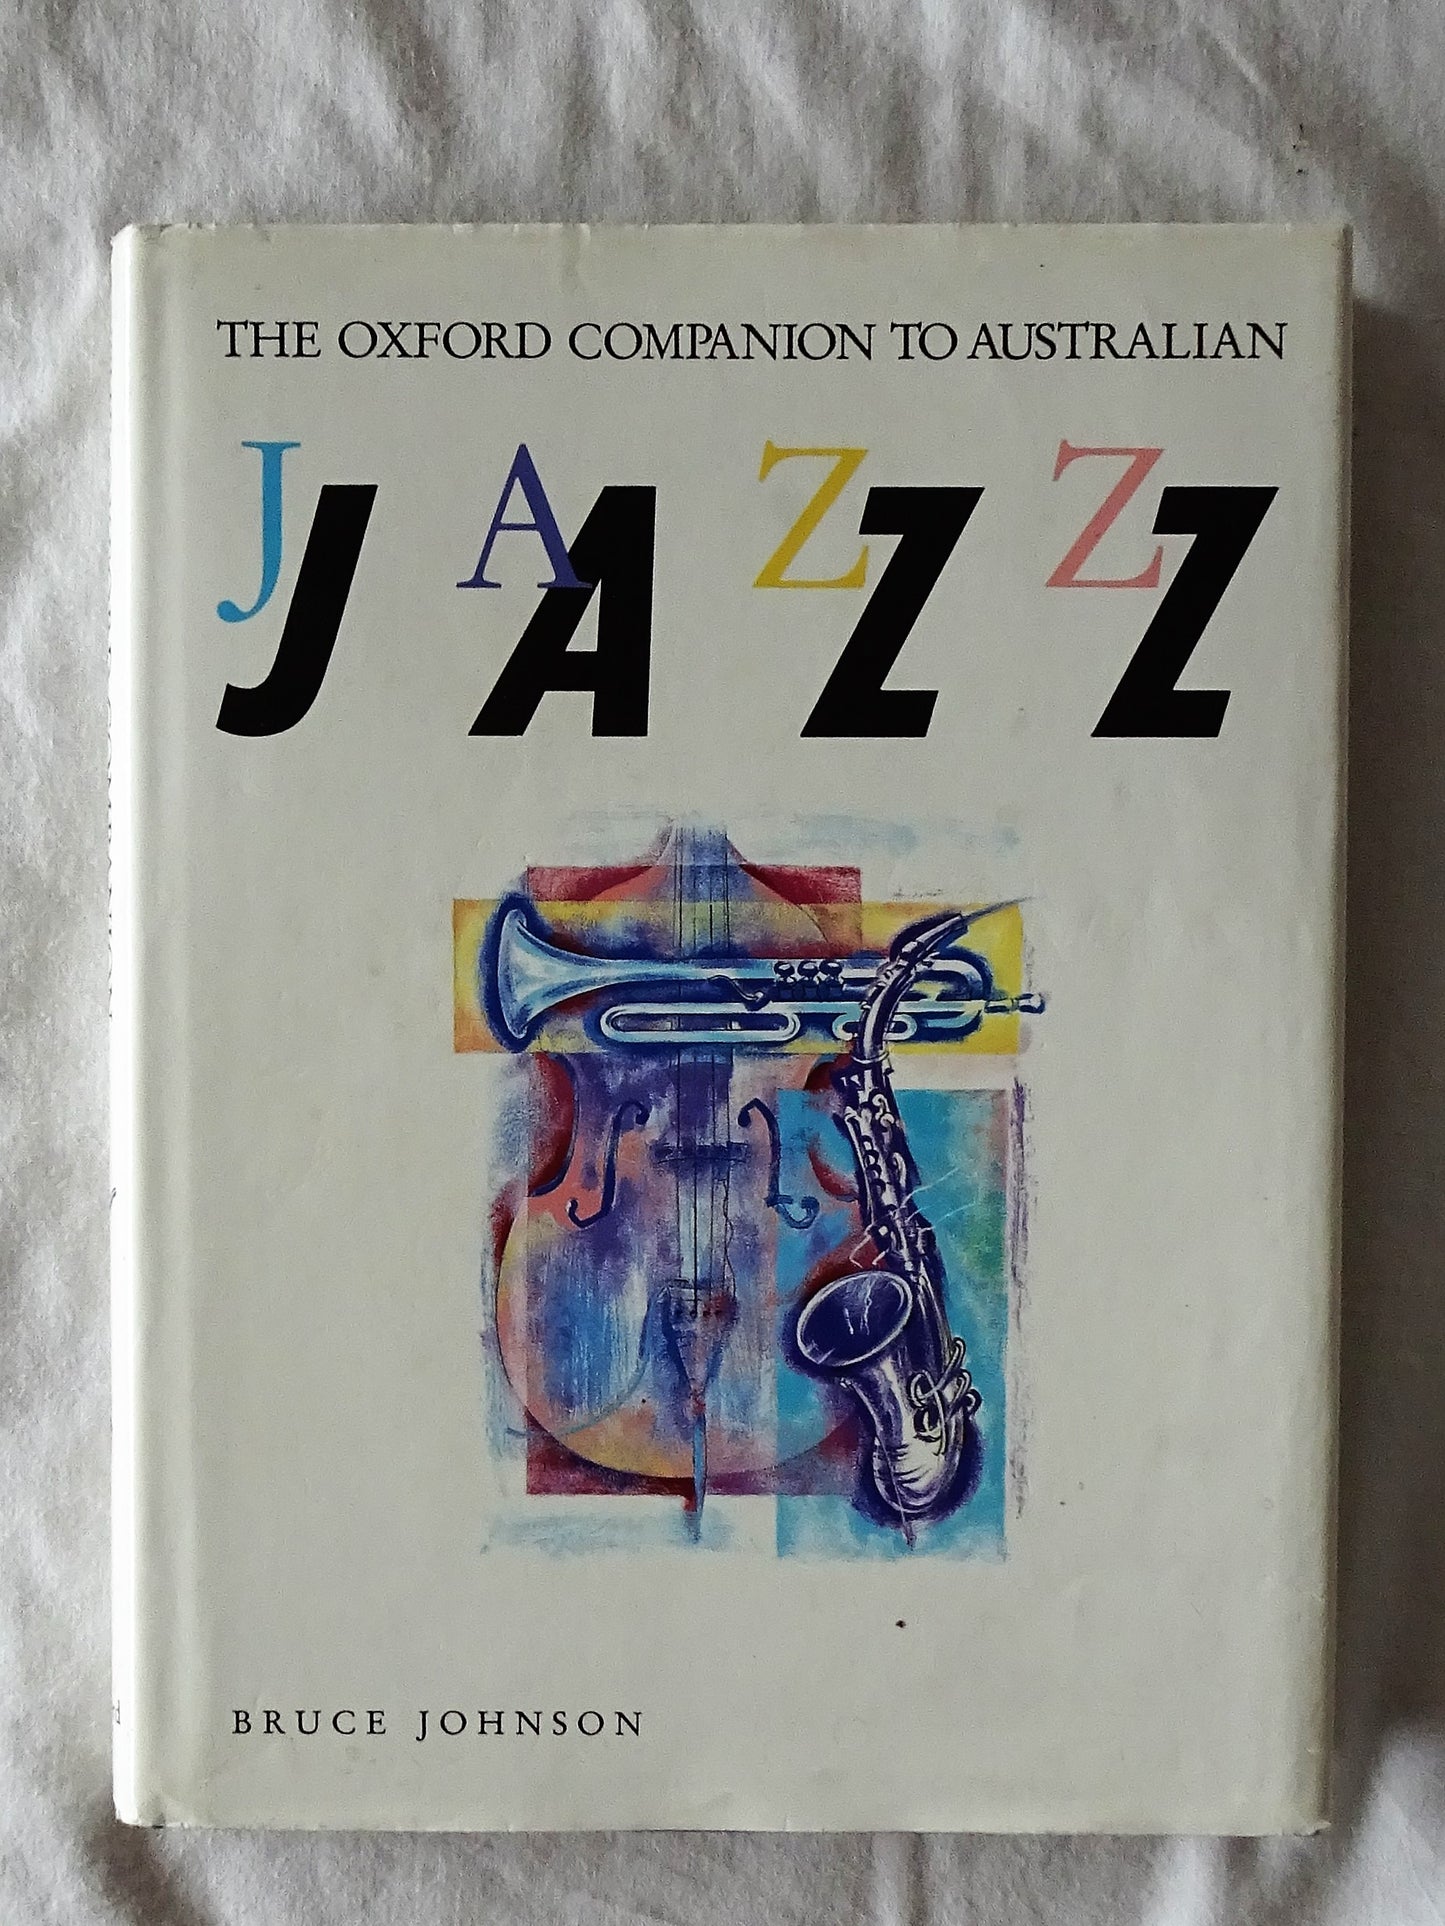 The Oxford Companion to Australian Jazz by Bruce Johnson